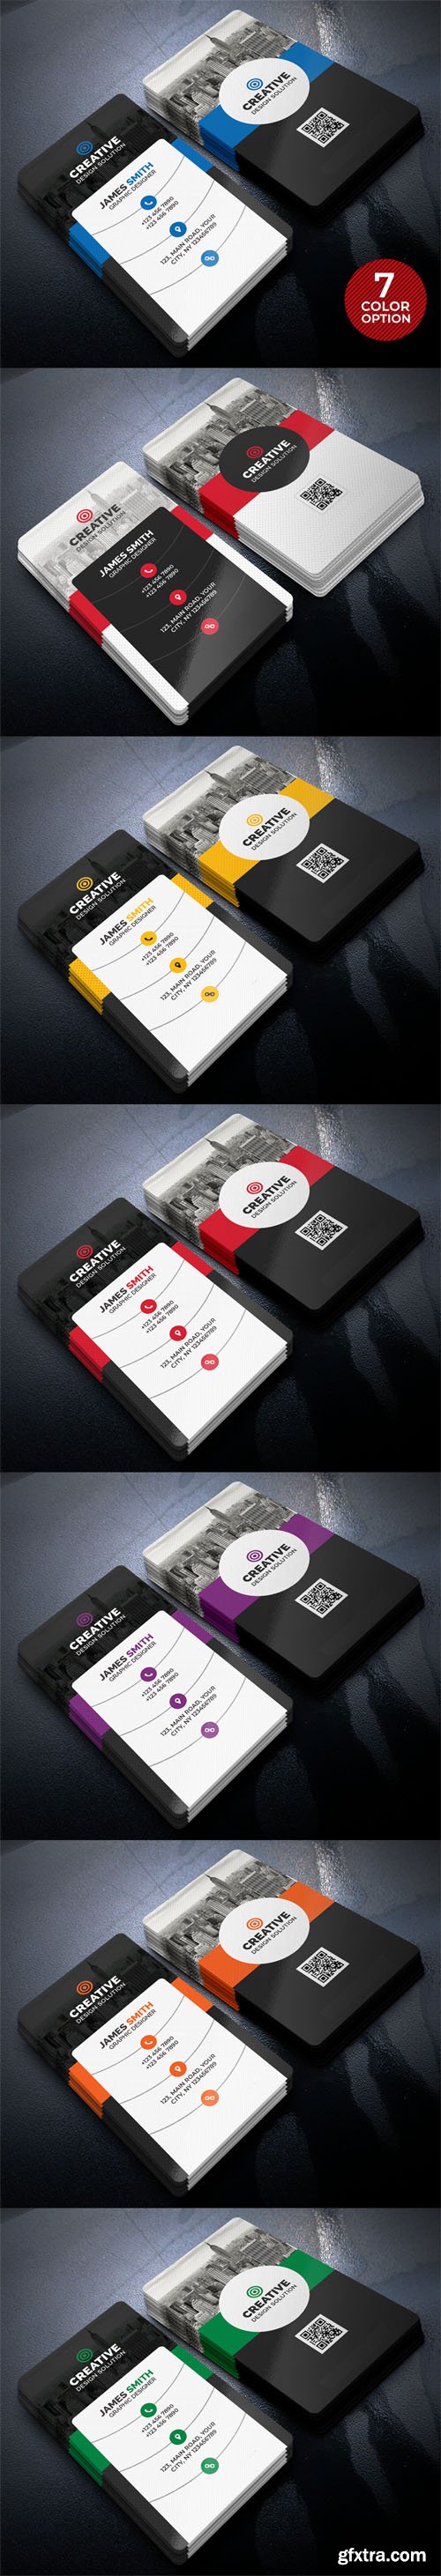 Creative Business Cards PSD Templates Bundle » GFxtra